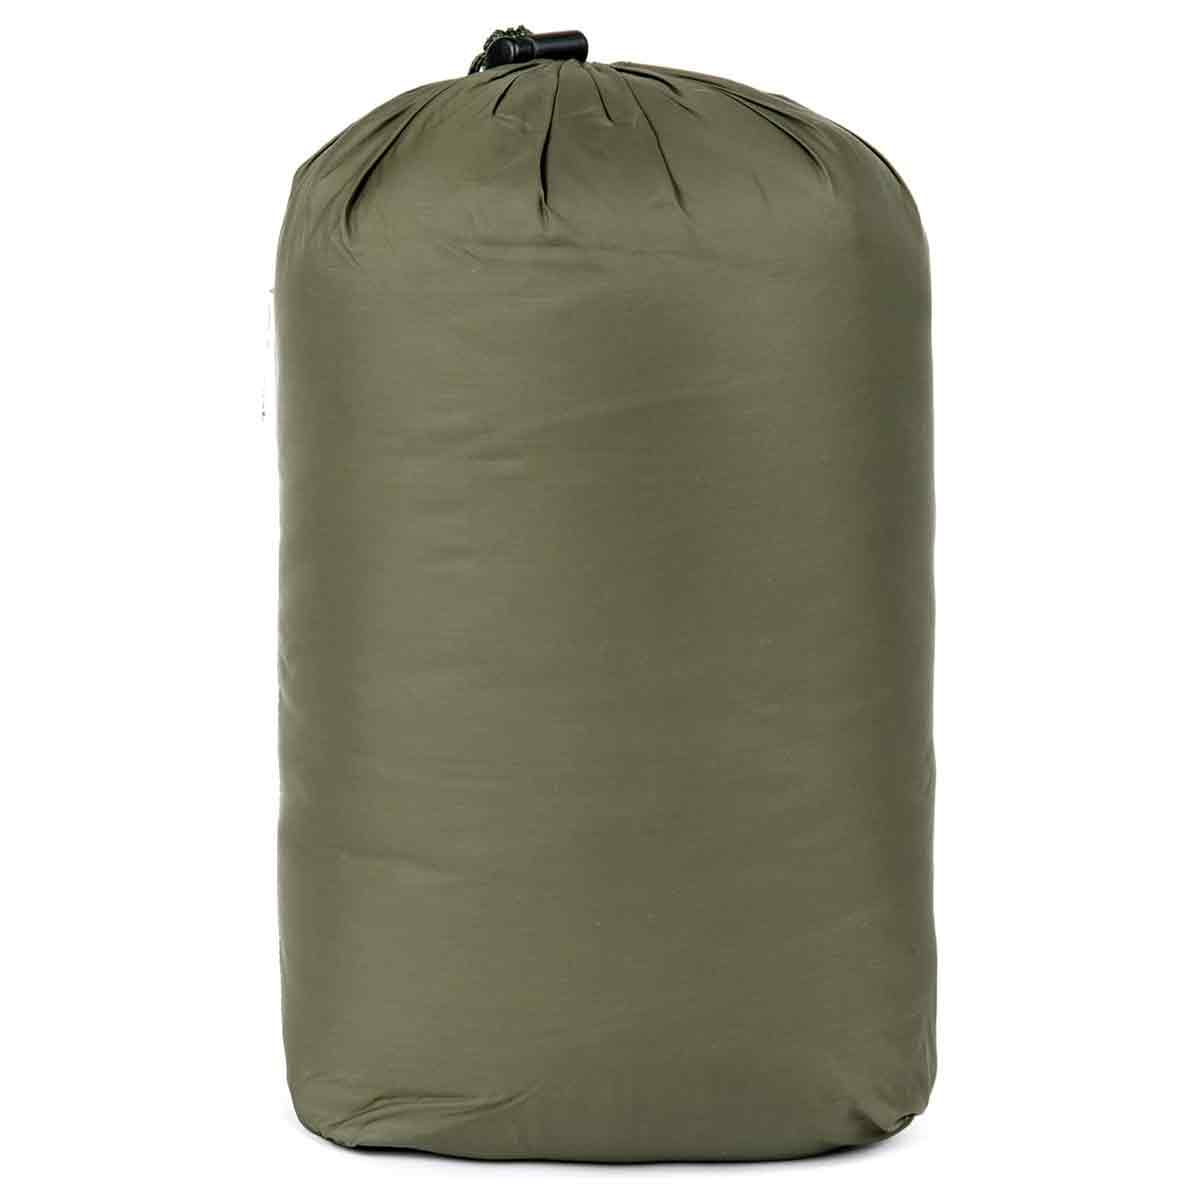 Snugpak Sleeping Bag Expanda Panel - John Bull Clothing